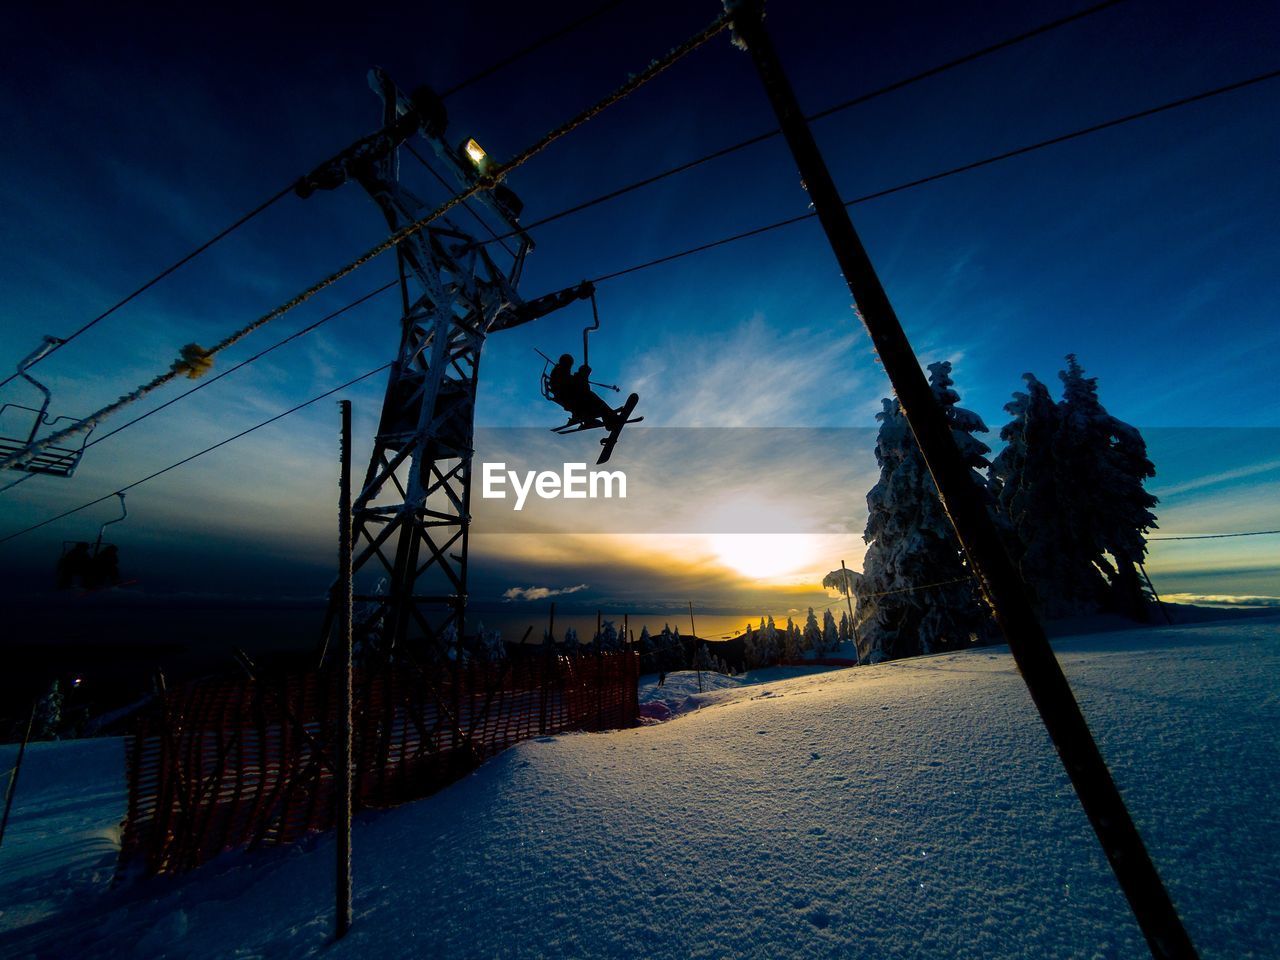 Silhouette ski lift against sky during winter